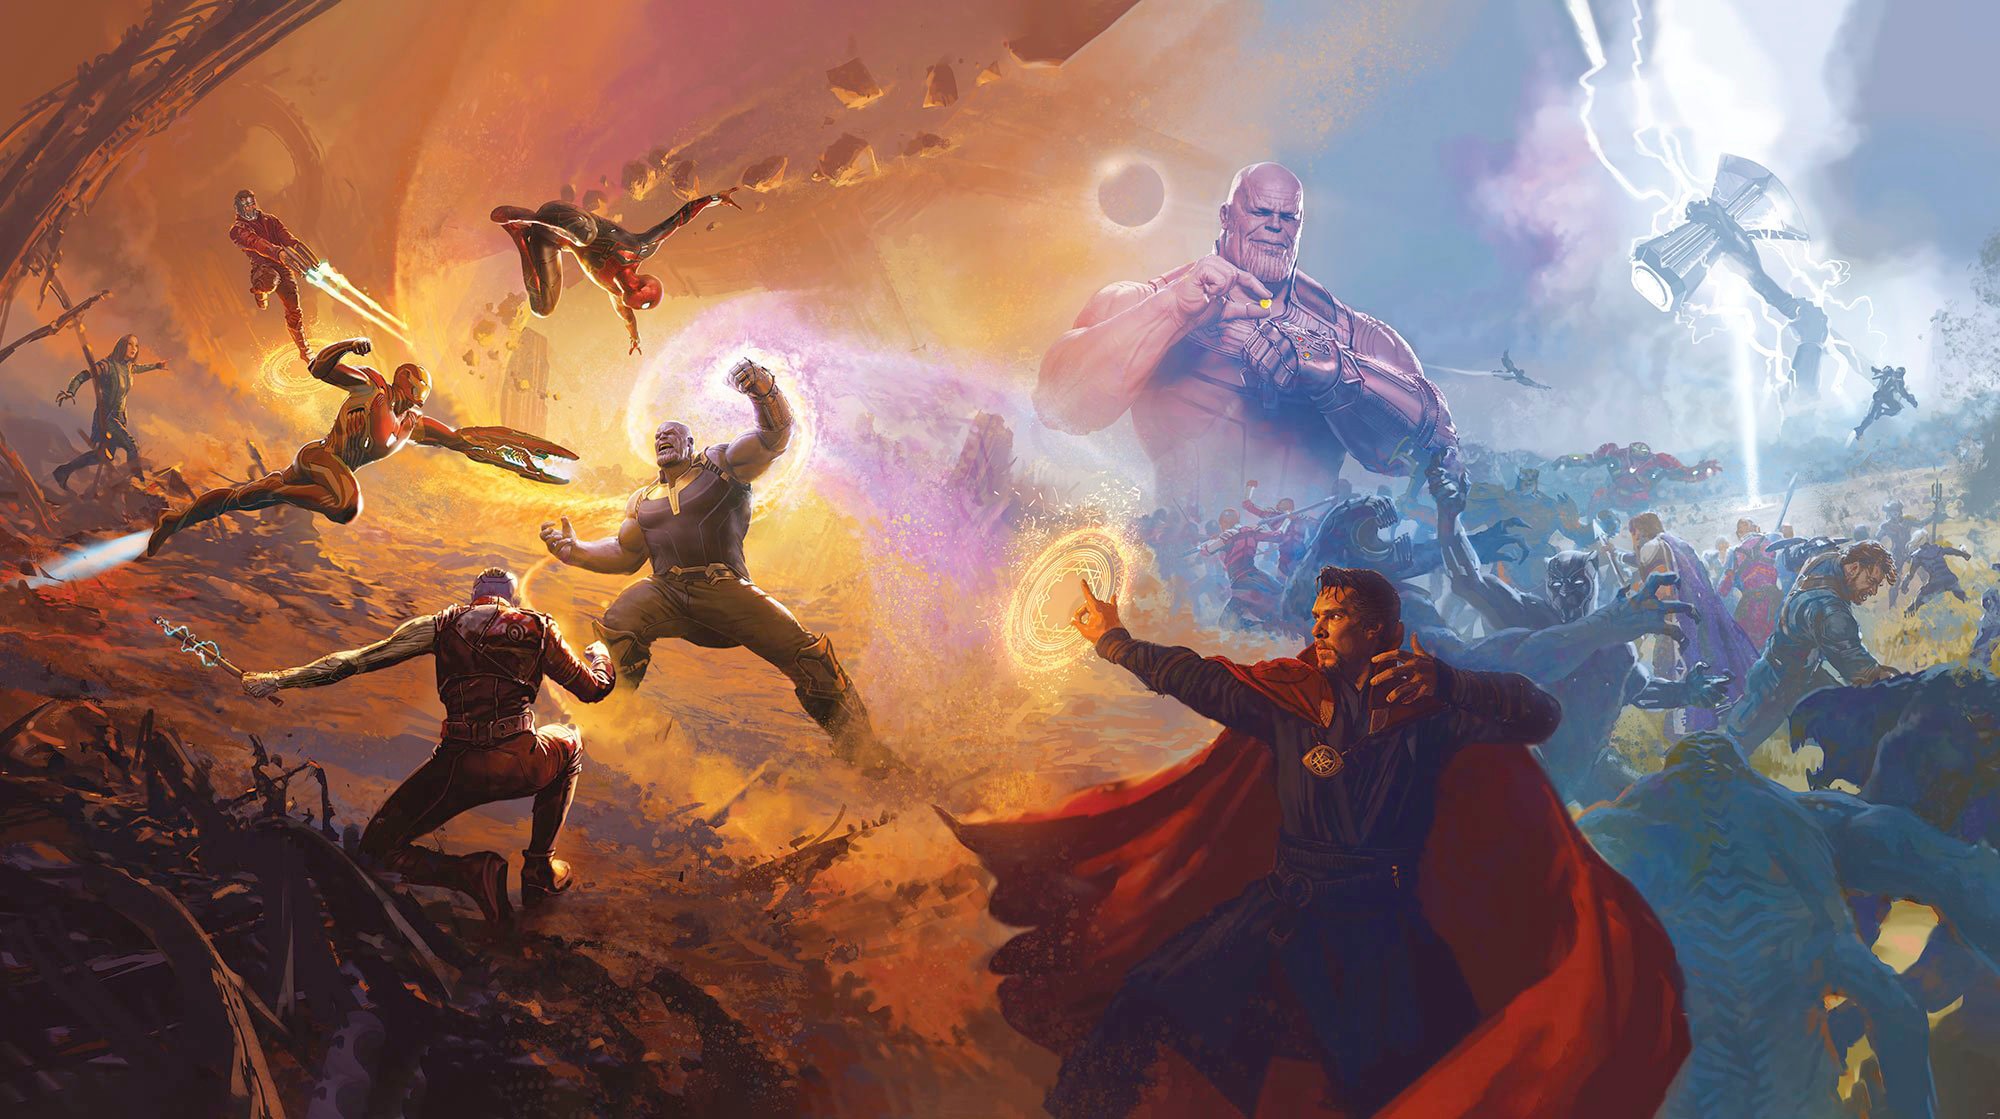 Vliestapete »Avengers Epic Battles Two Worlds«, 500x280 cm (Breite x Höhe)